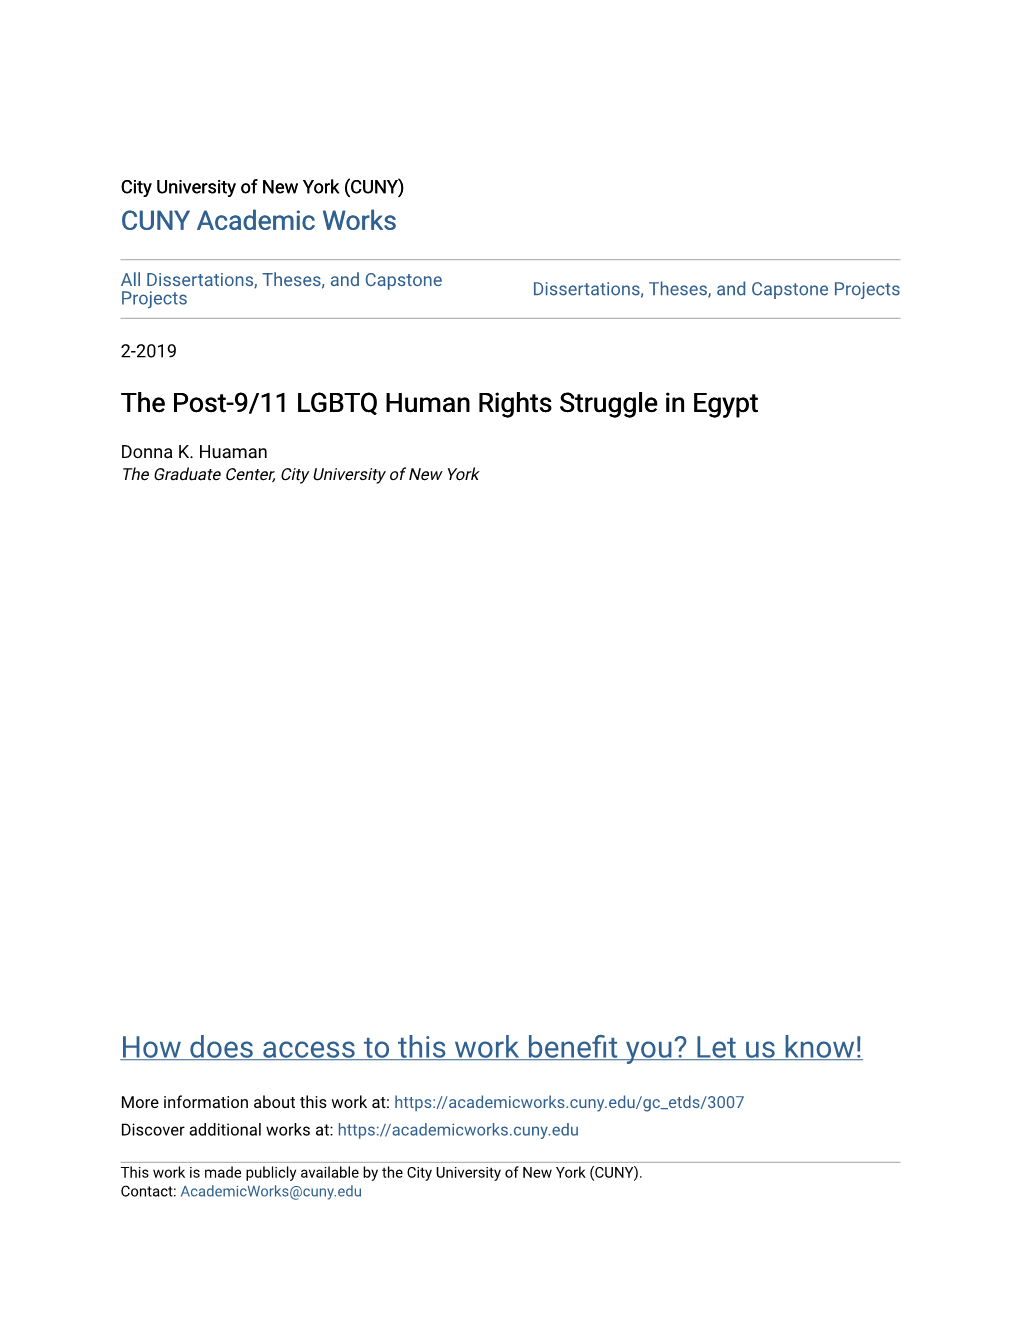 The Post-9/11 LGBTQ Human Rights Struggle in Egypt